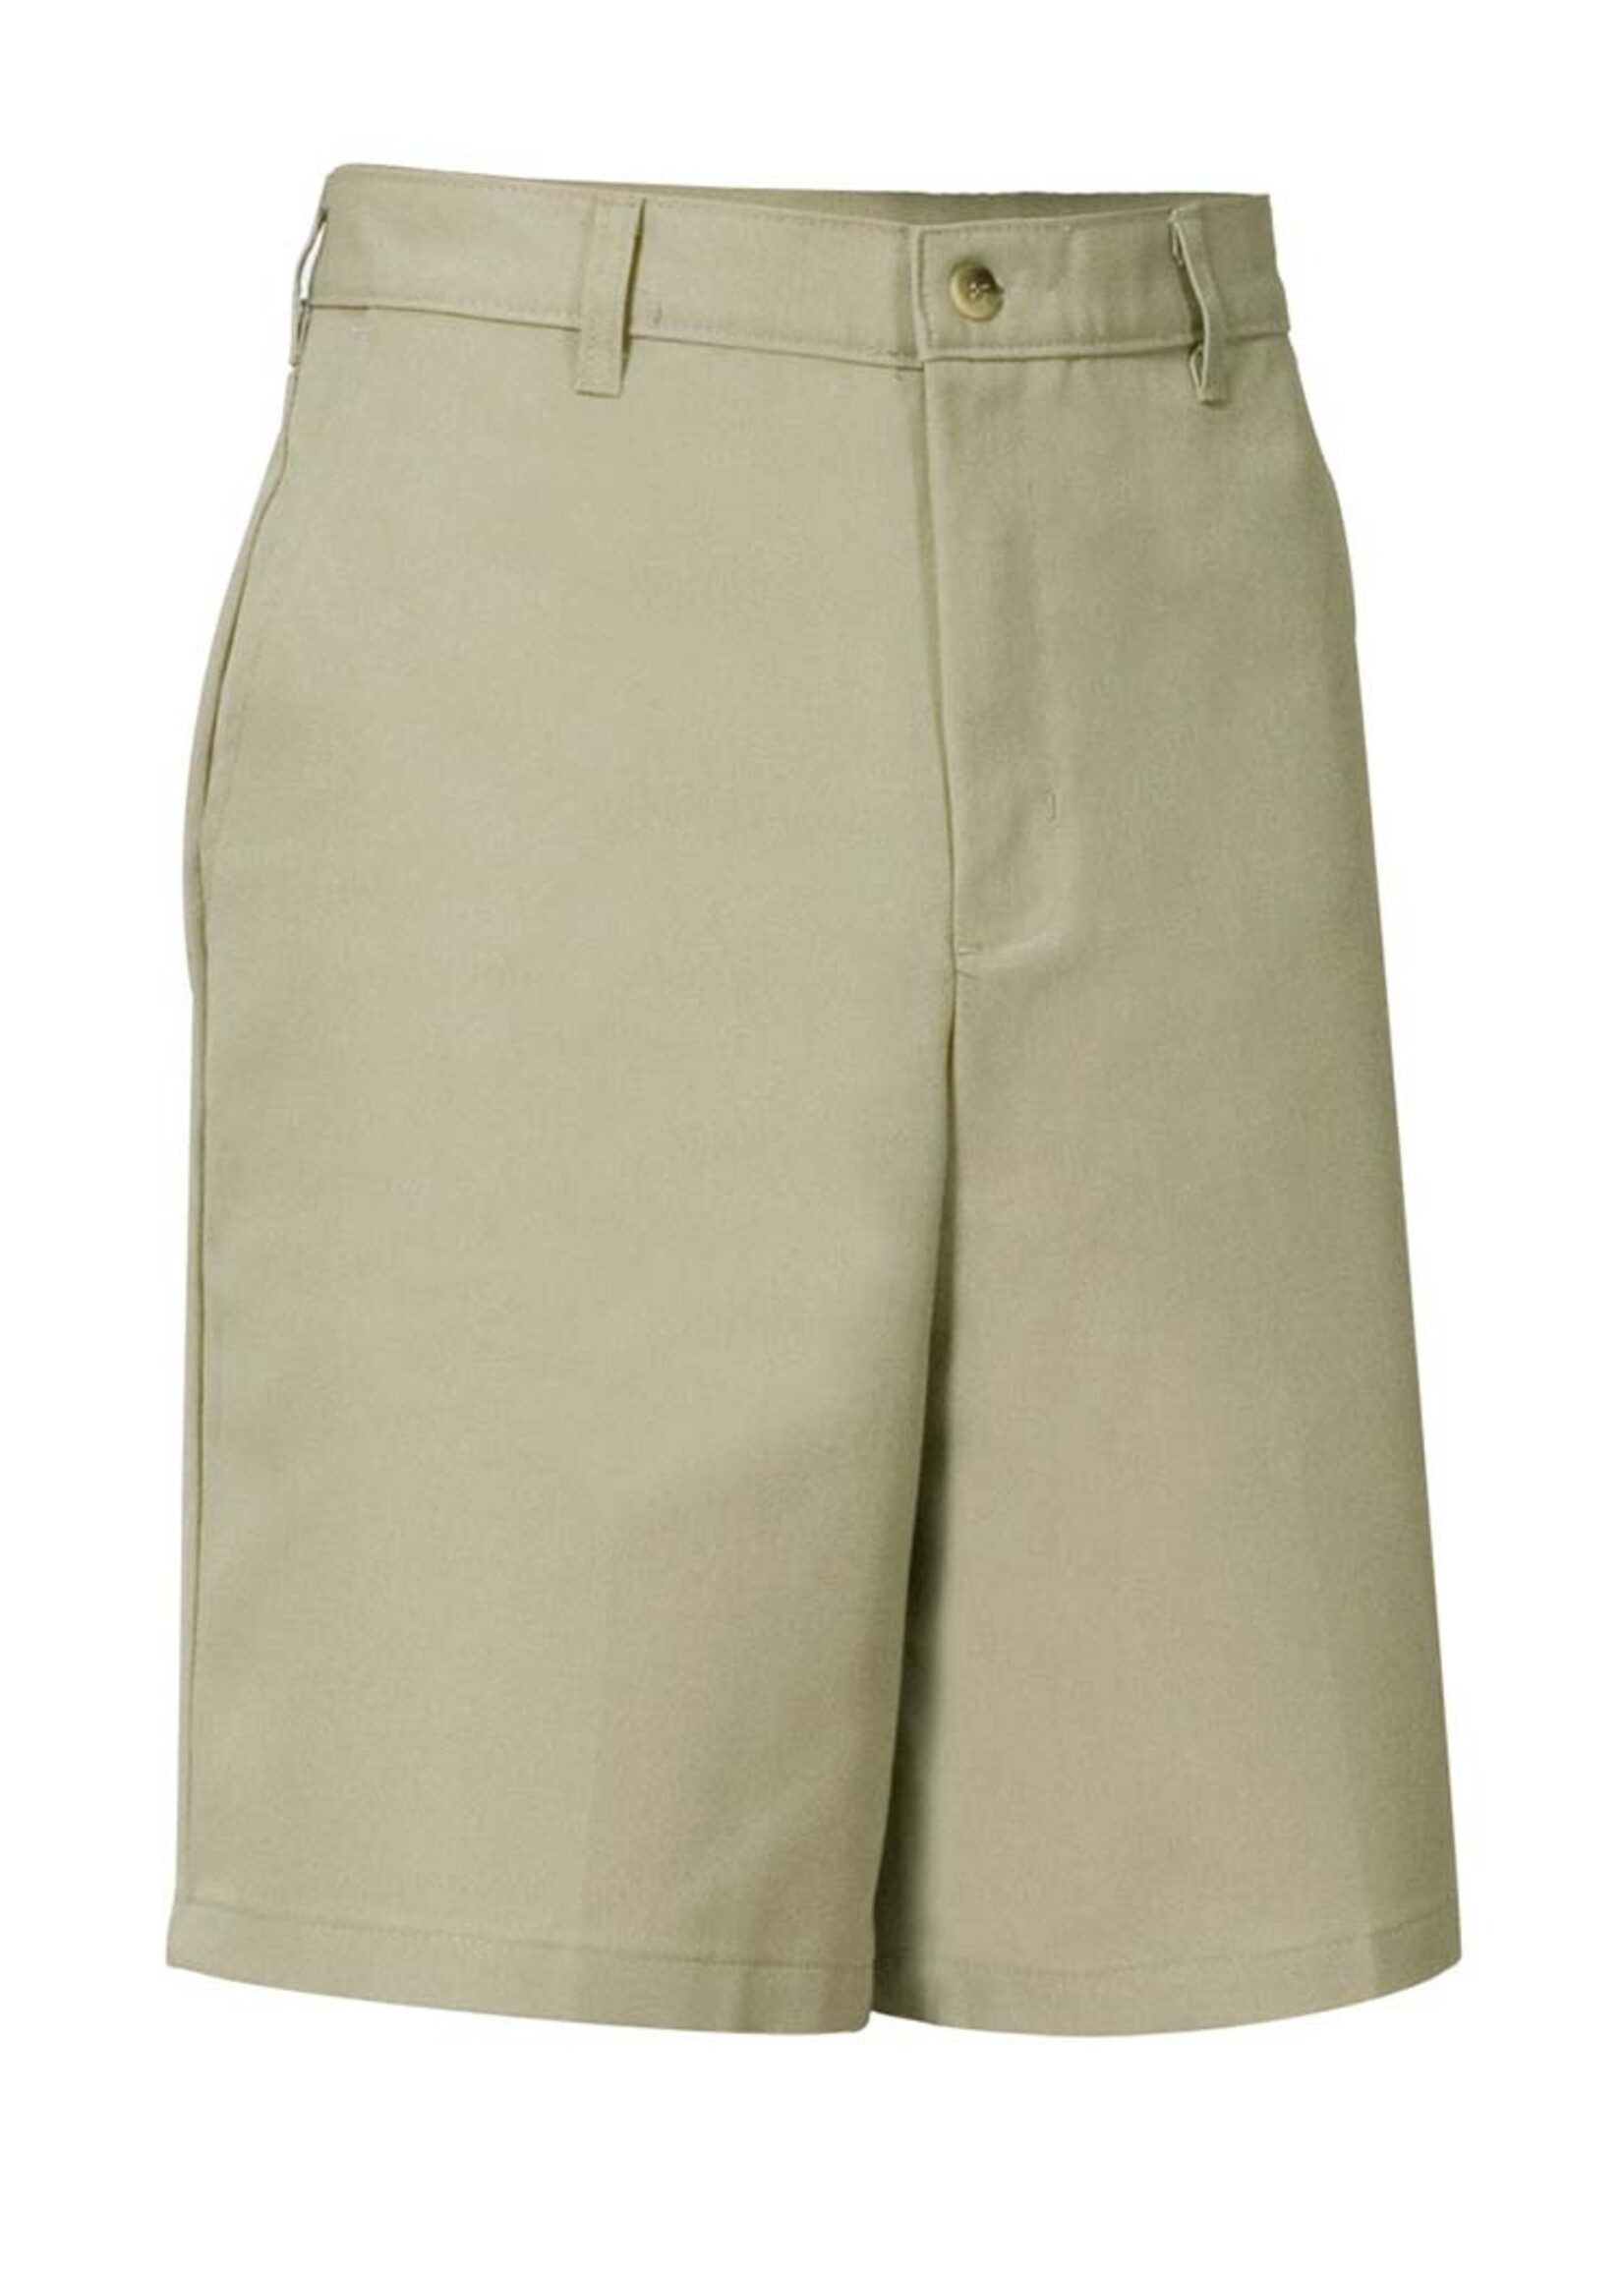 A+ Boys Flat Front Shorts (KN)